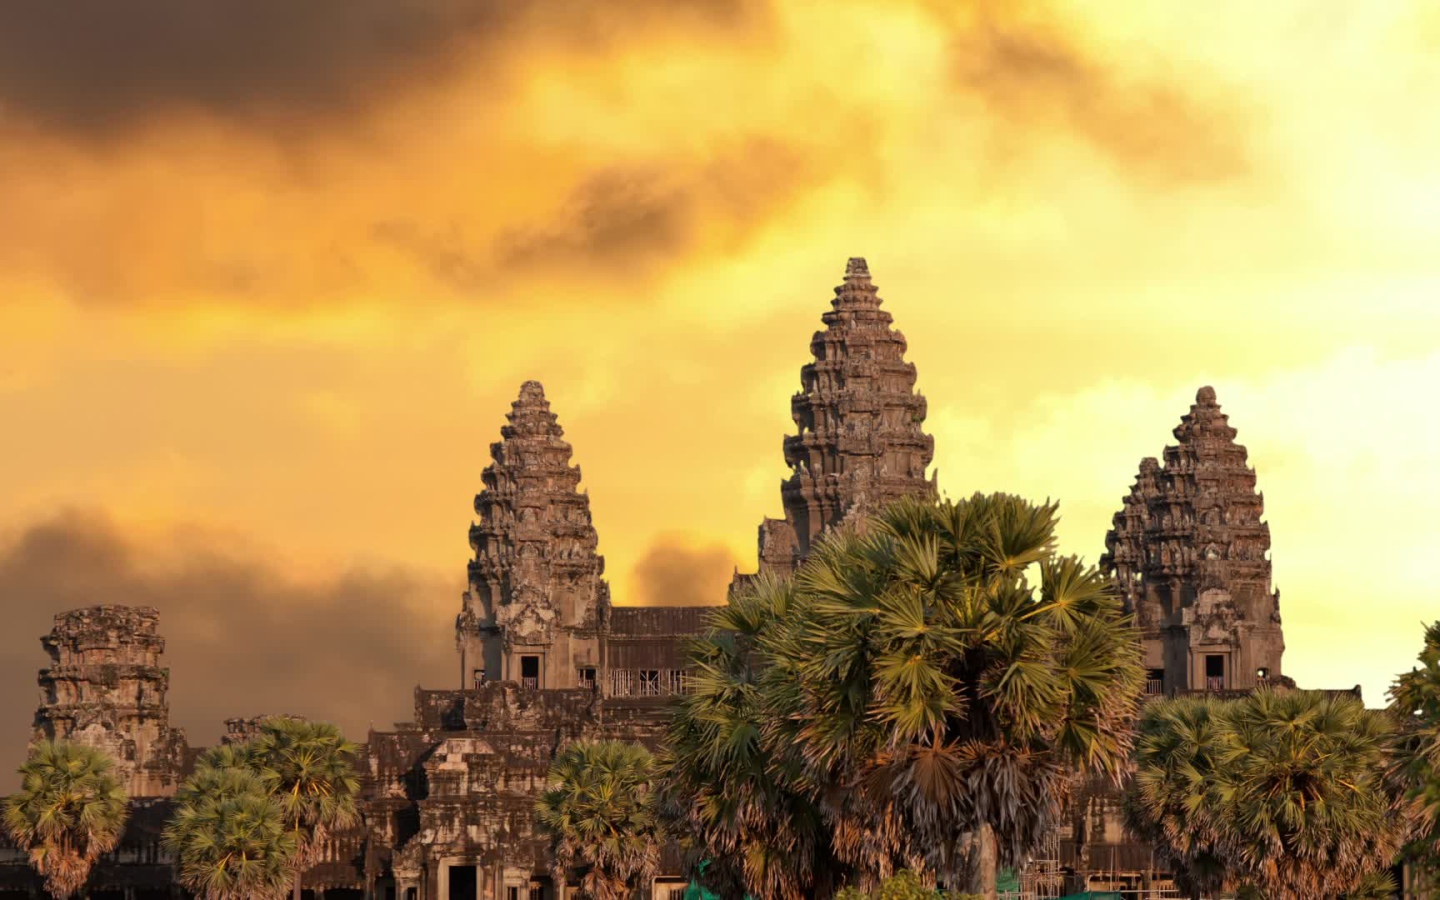 Древний храм Ангкор Ват башни на фоне заката 